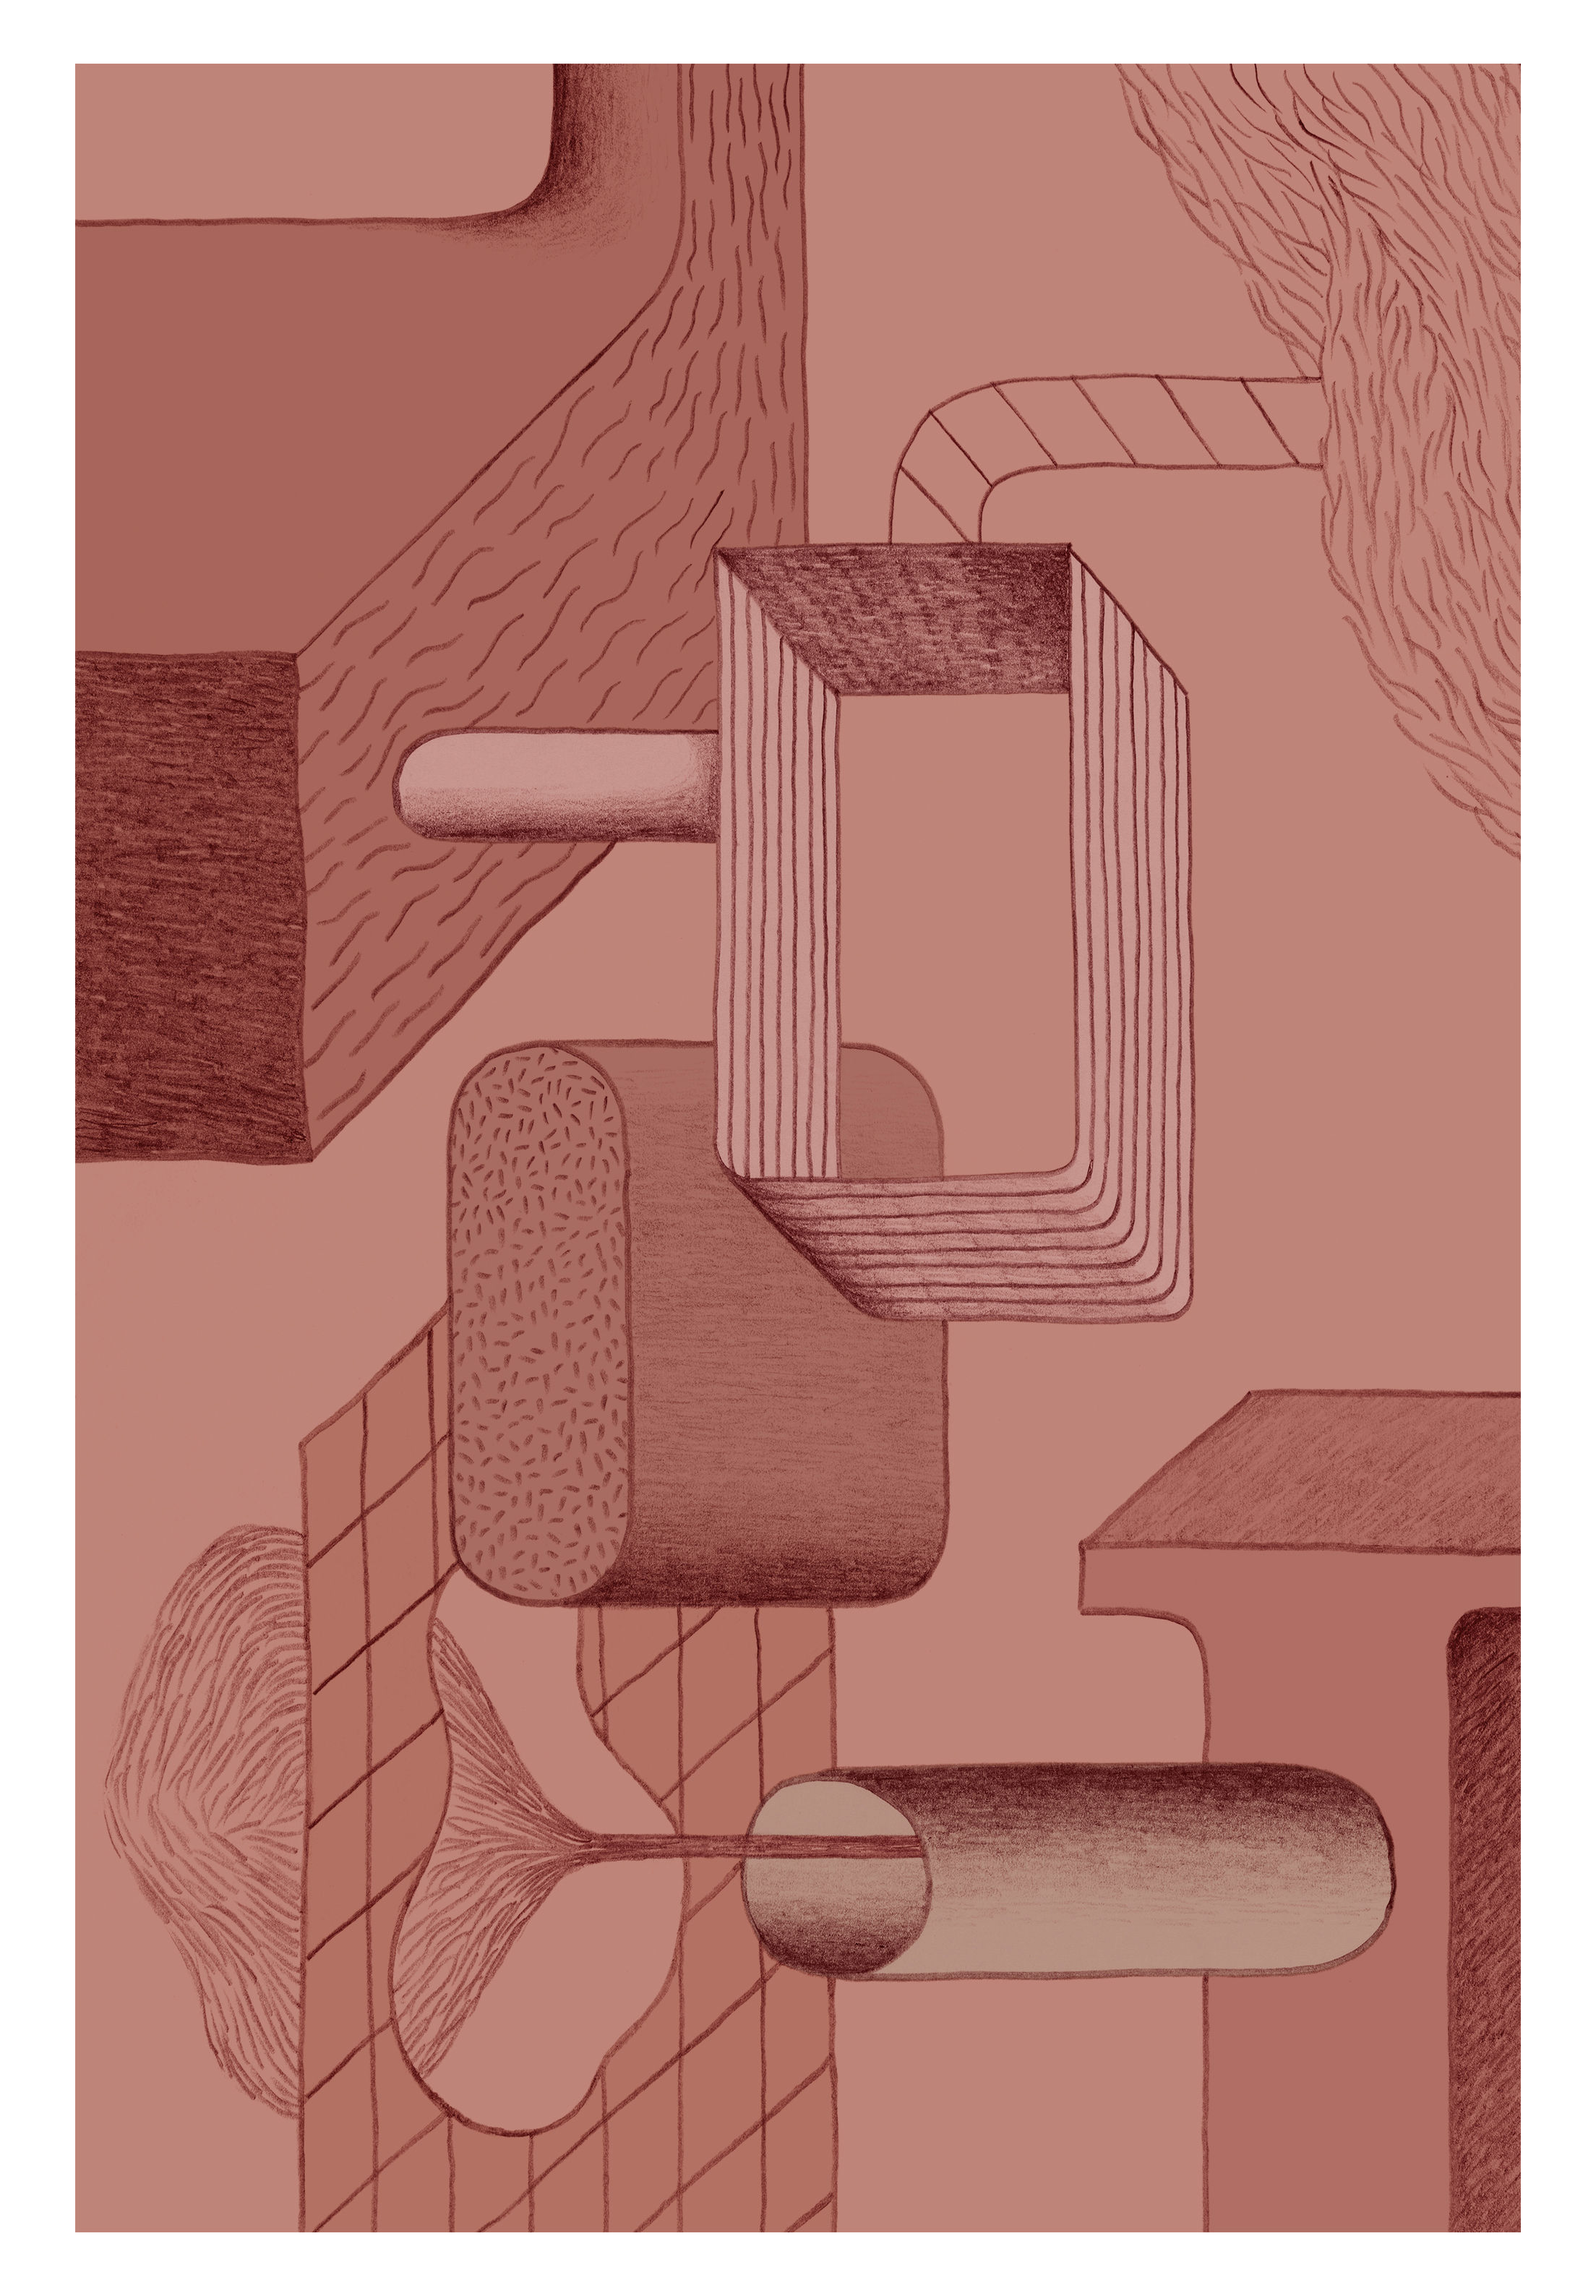 Teppich Station von Made Editions | Design - in Made In rosa design